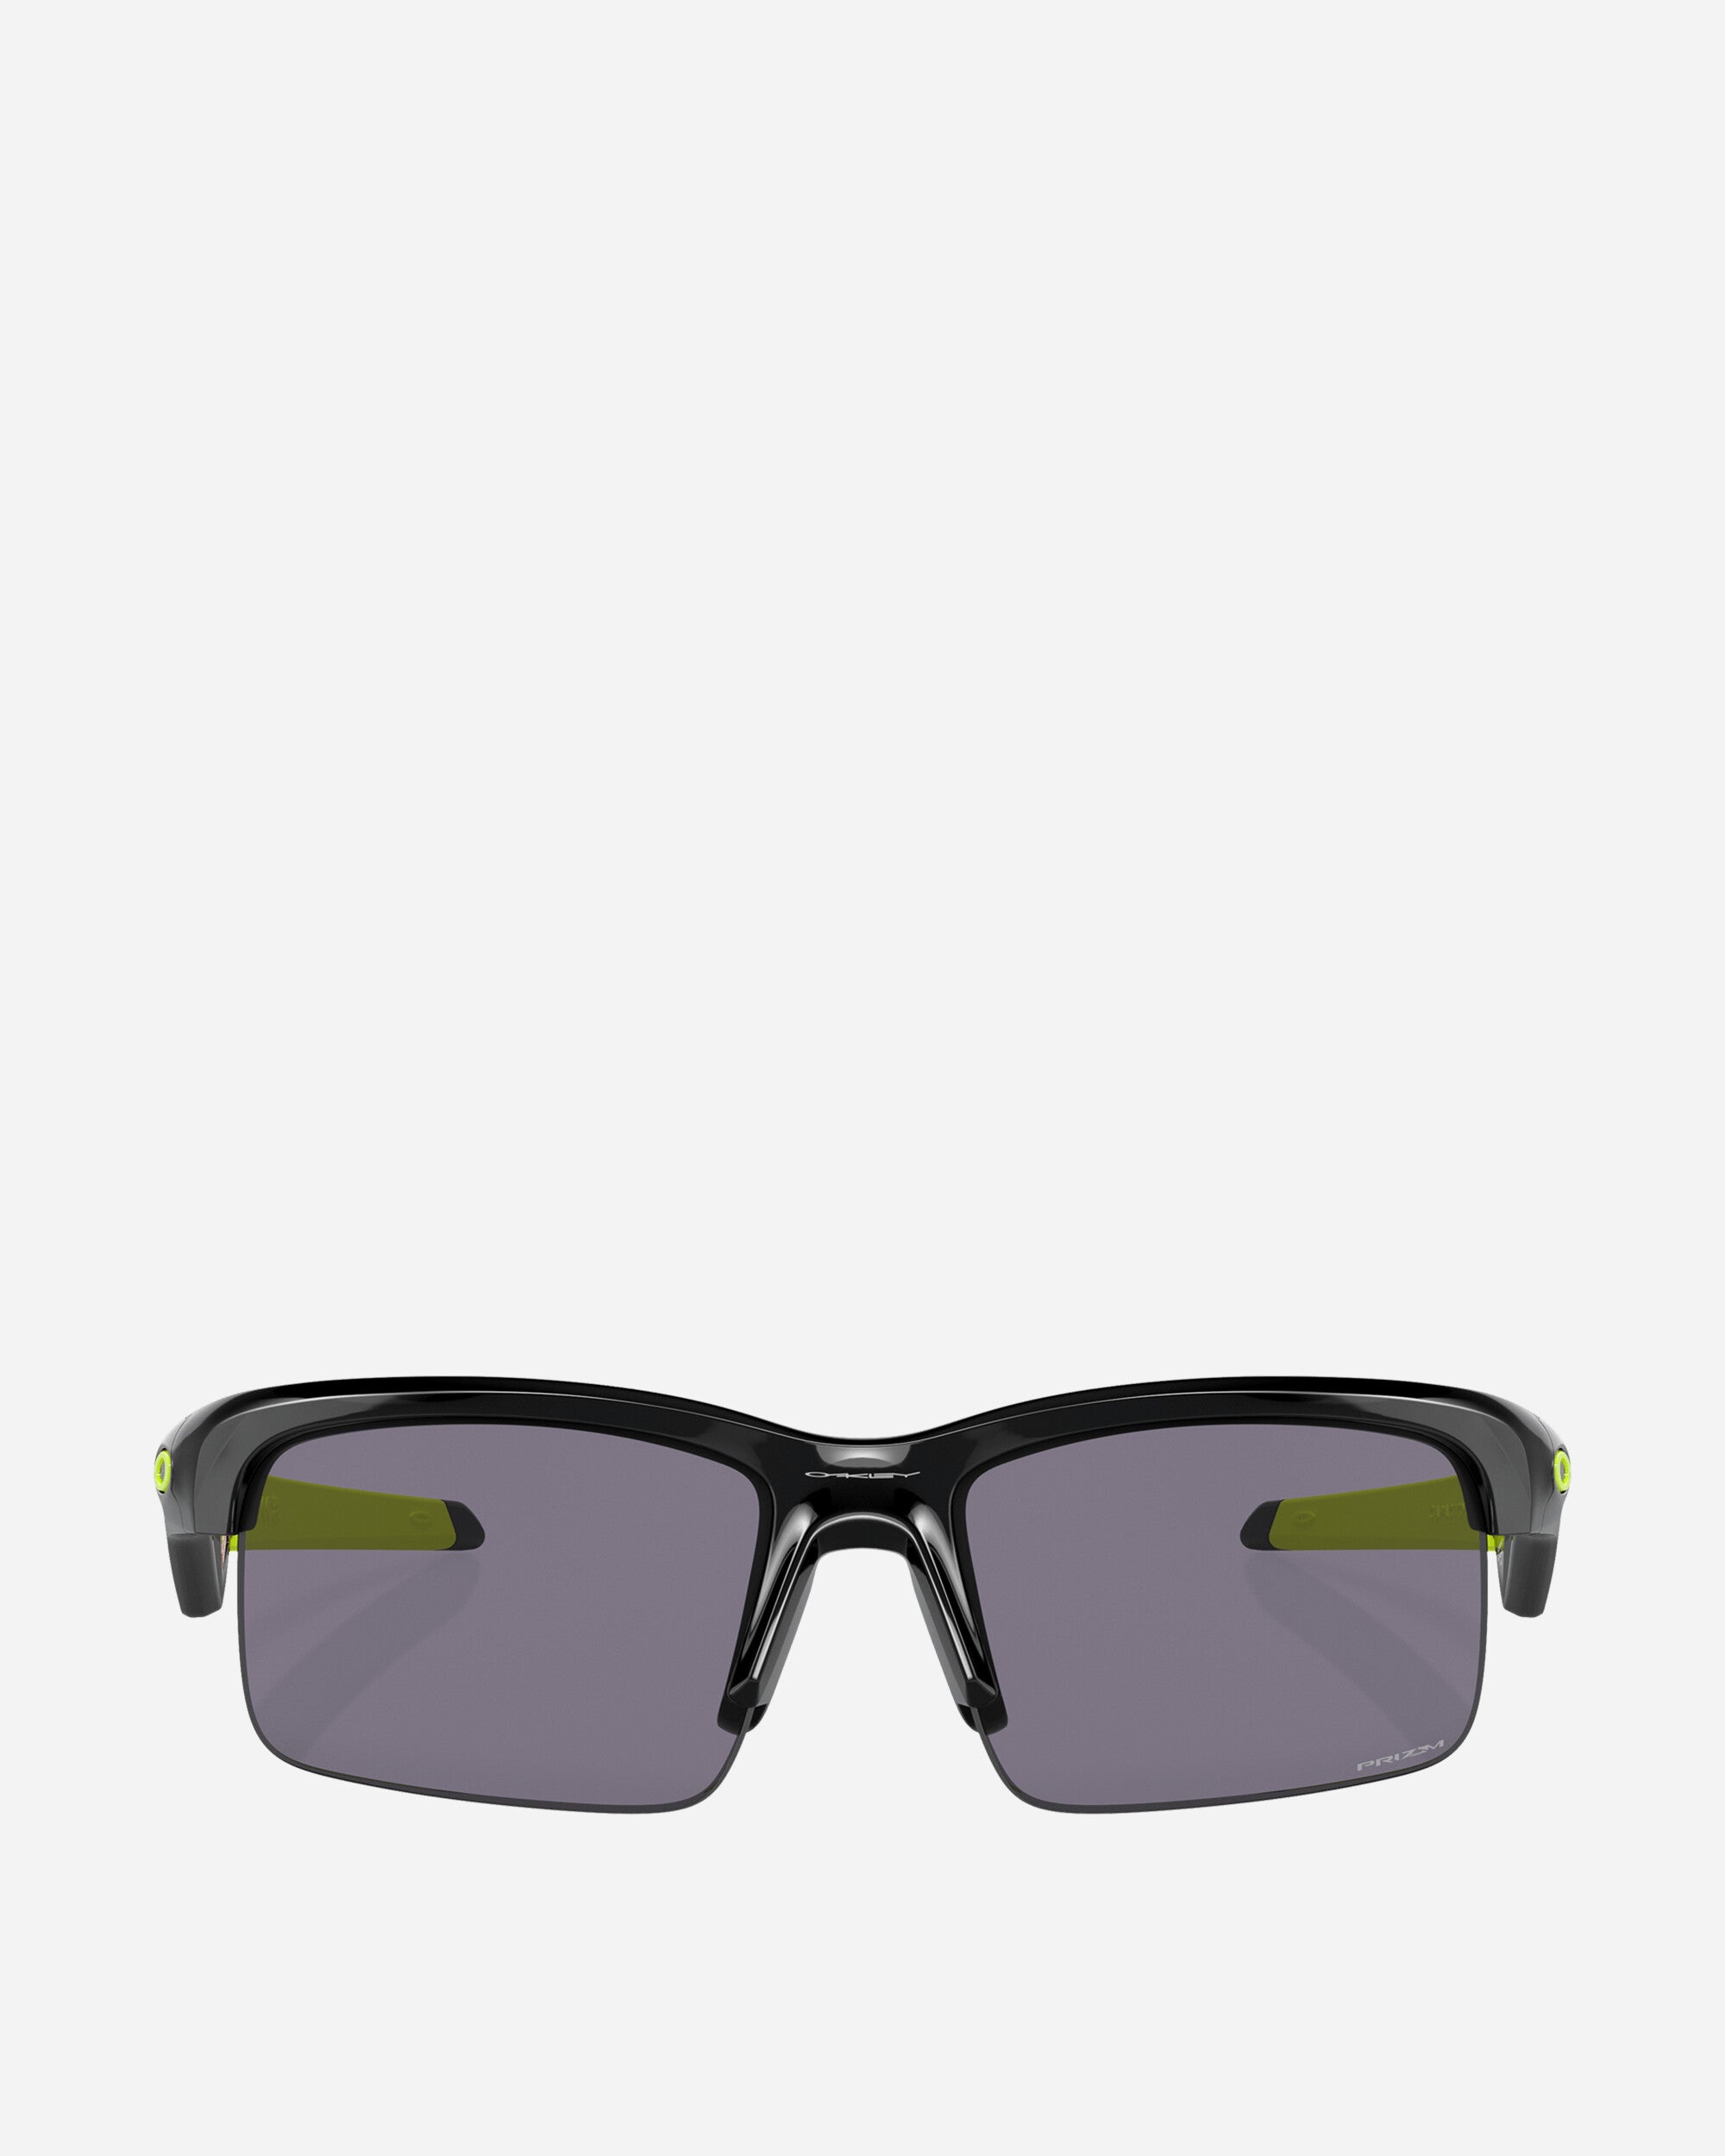 Capacitor Sunglasses Polished Black / Prizm  Grey